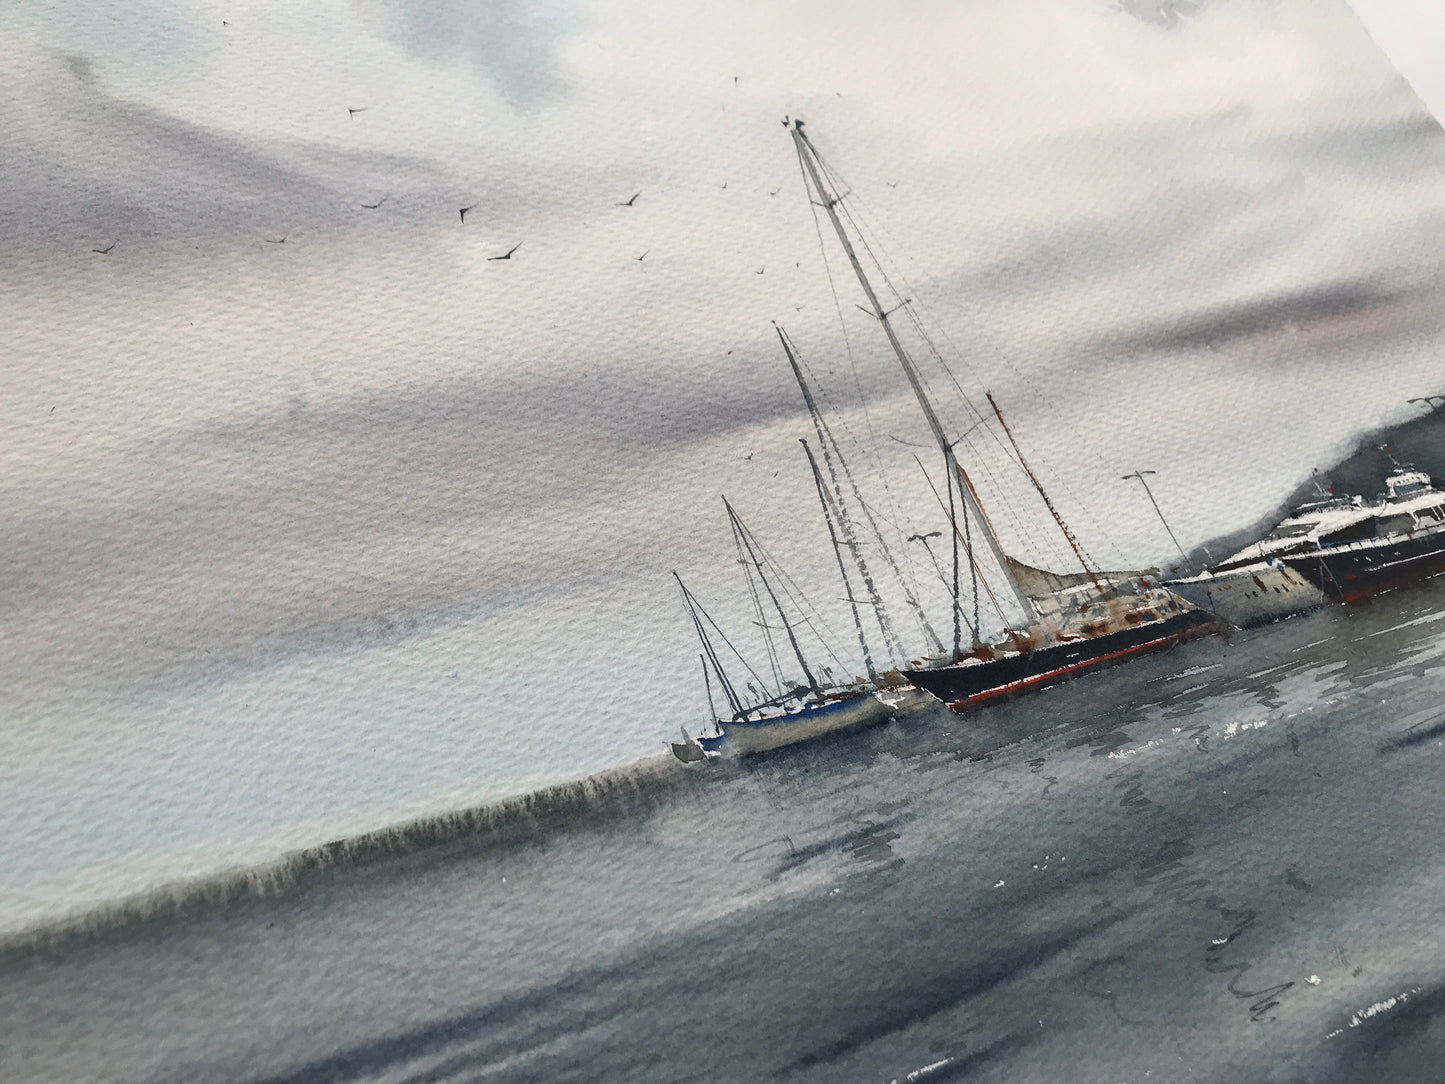 Nautical Watercolor Painting Original - Moored yachts, Palamos - 15 x 22 in